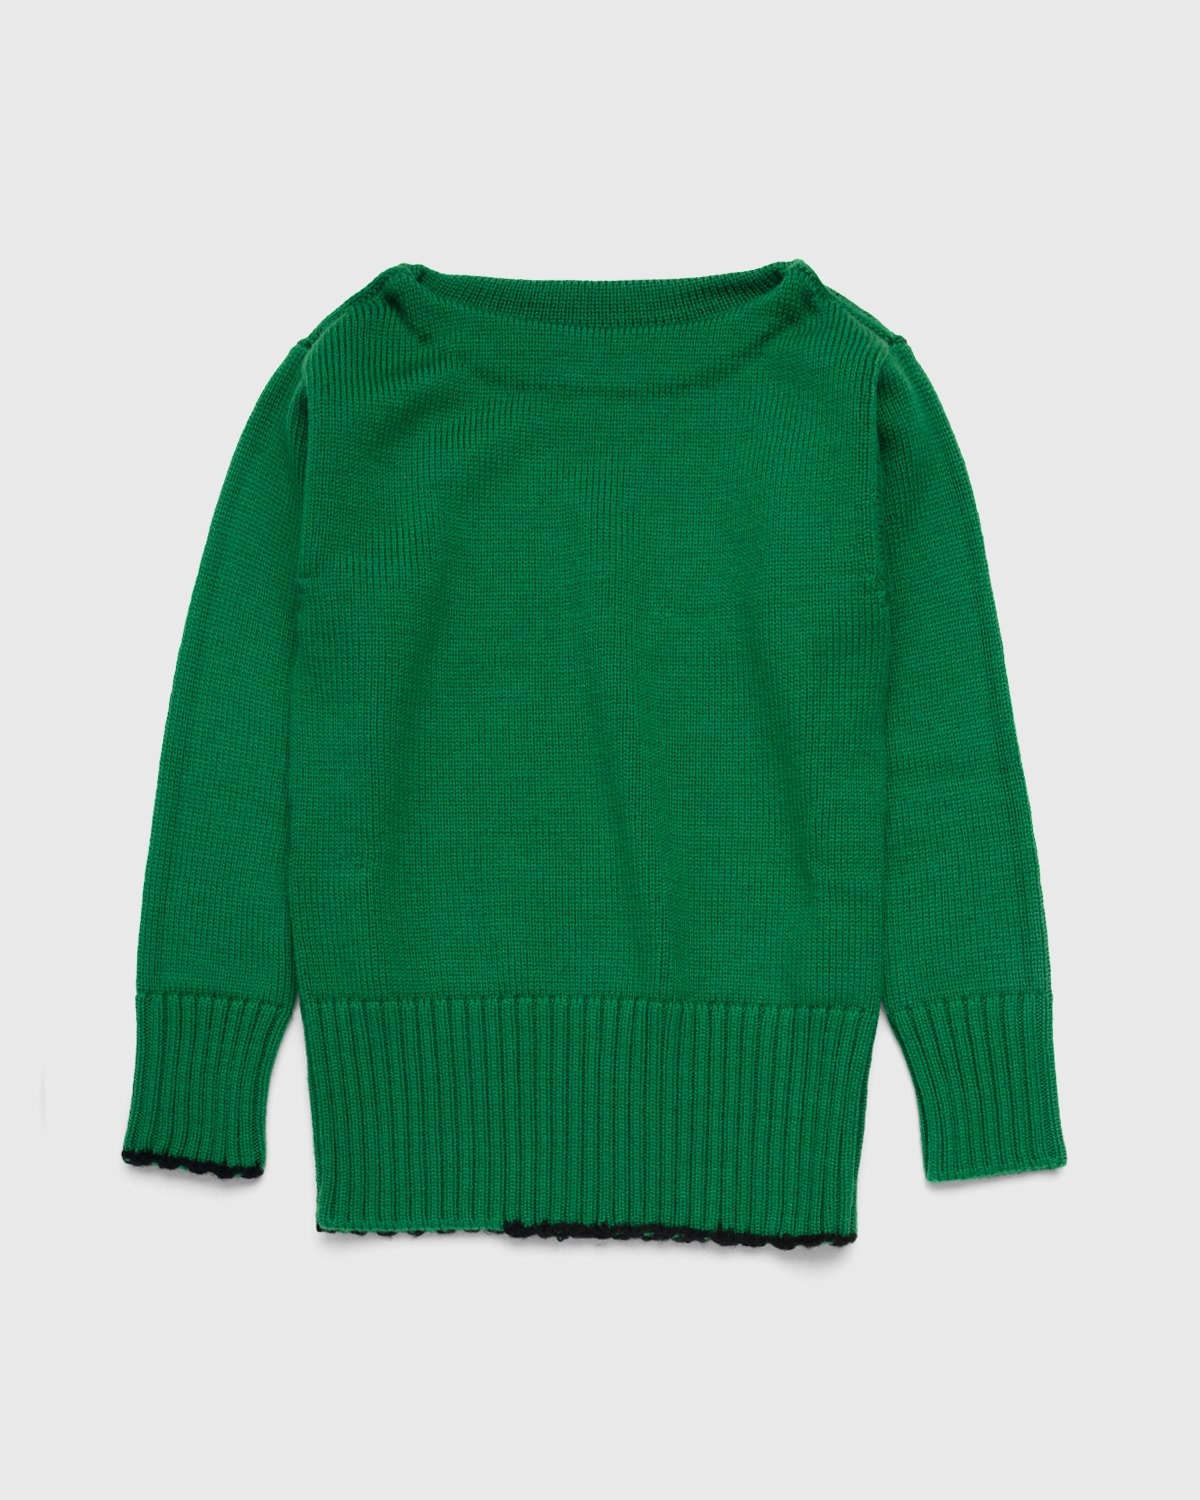 Maison Margiela – Summer Camp Sweater Green - Knitwear - Green - Image 1